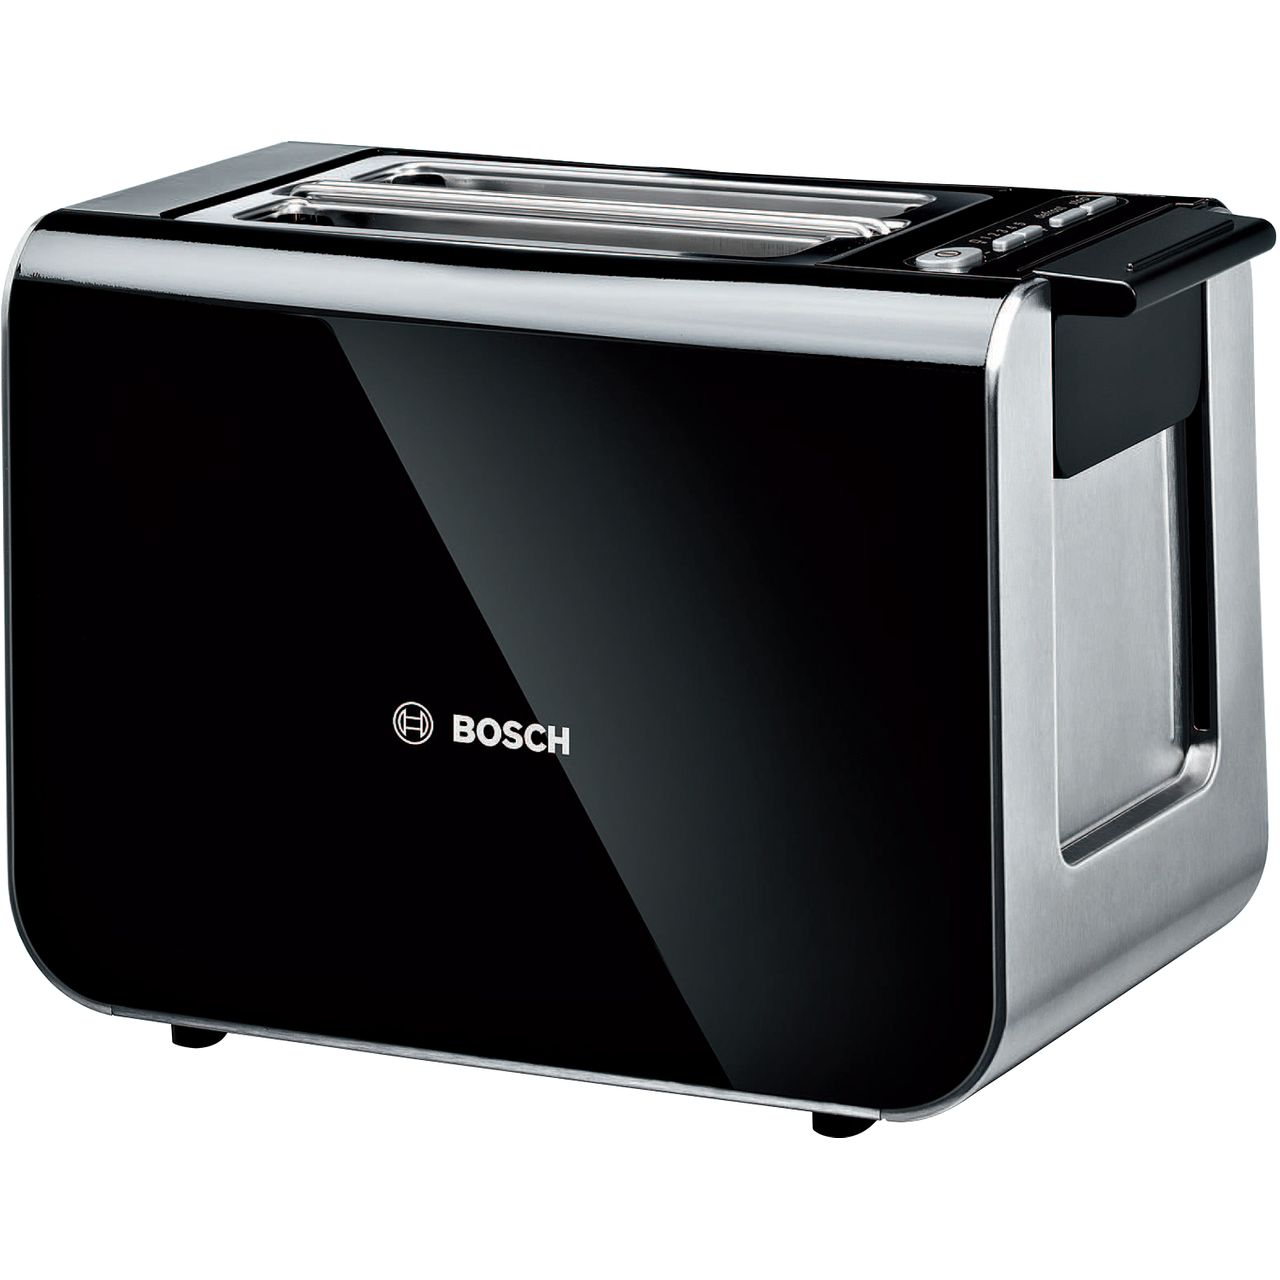 Bosch Styline TAT8613GB 2 Slice Toaster Review